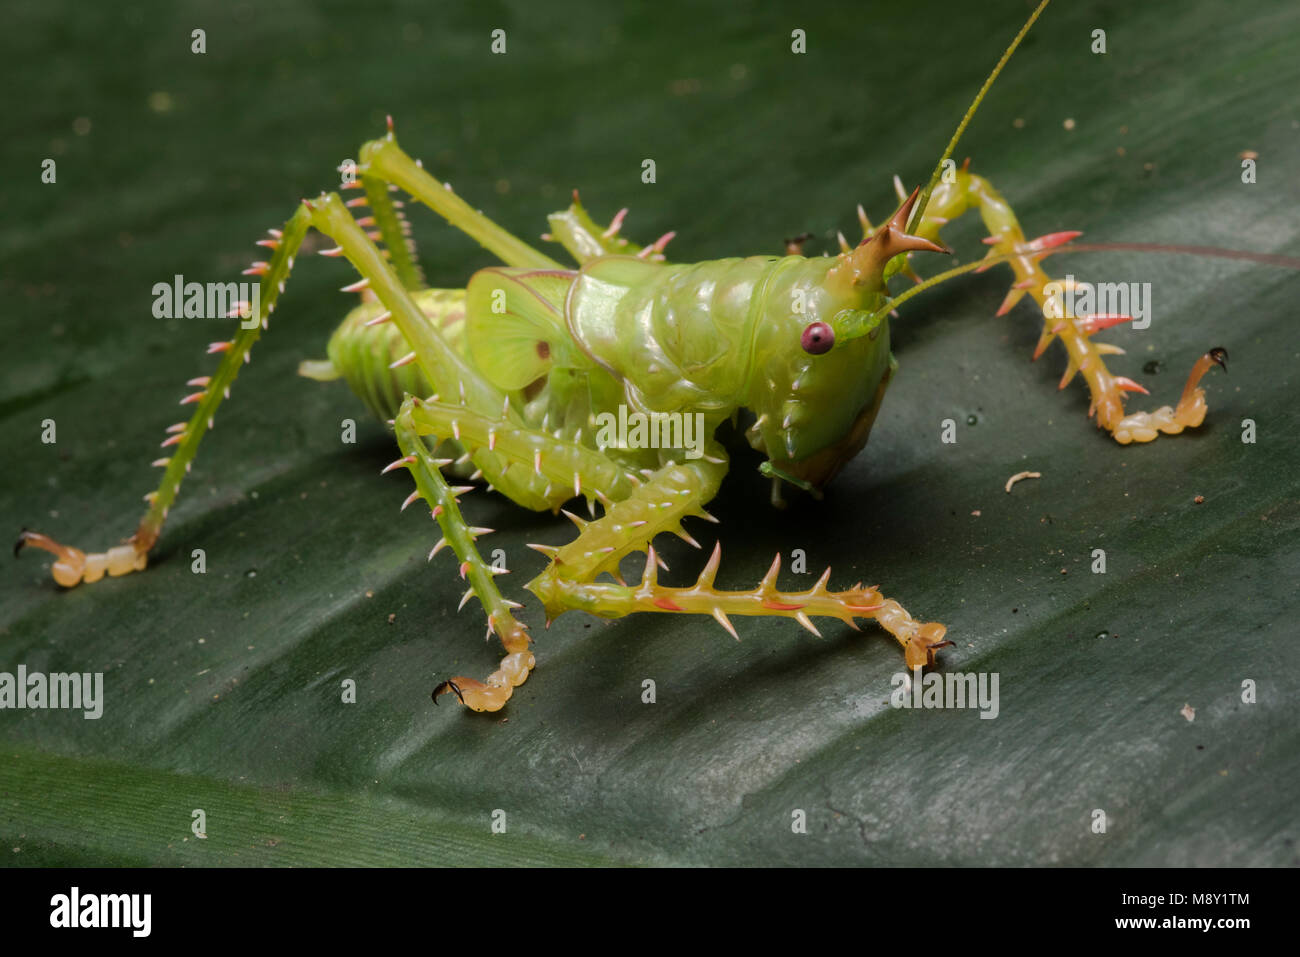 A spiny & predatory katydid from the Peruvian jungle. Stock Photo